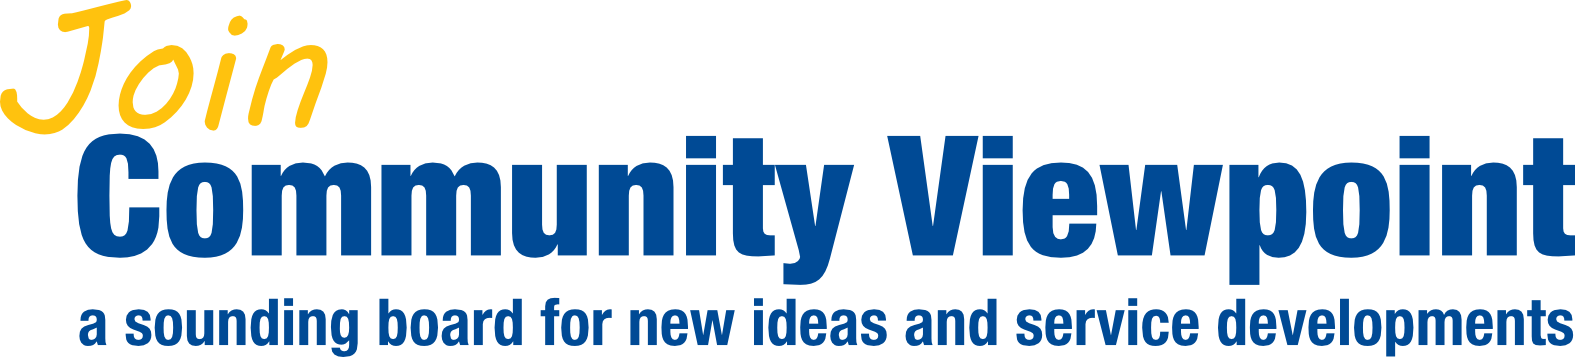 Community View Point logo